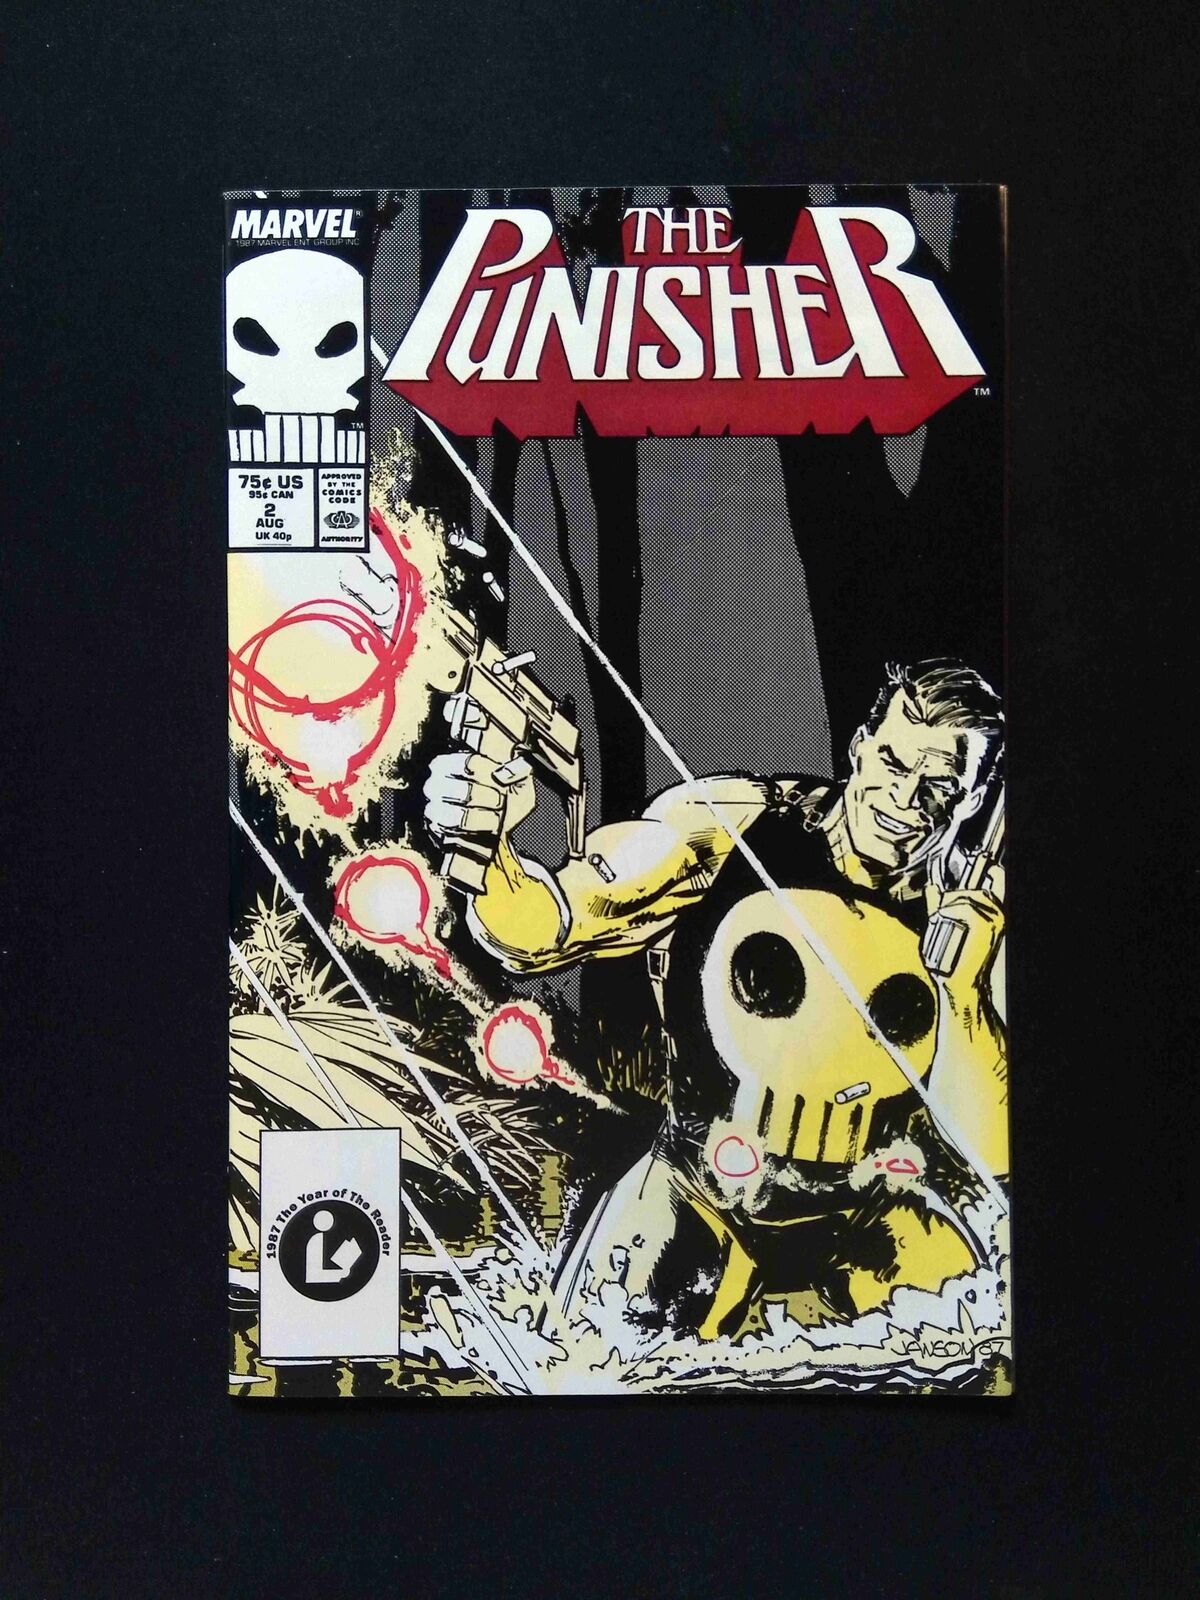 Punisher #2 (2ND SERIES) MARVEL Comics 1987 VF/NM